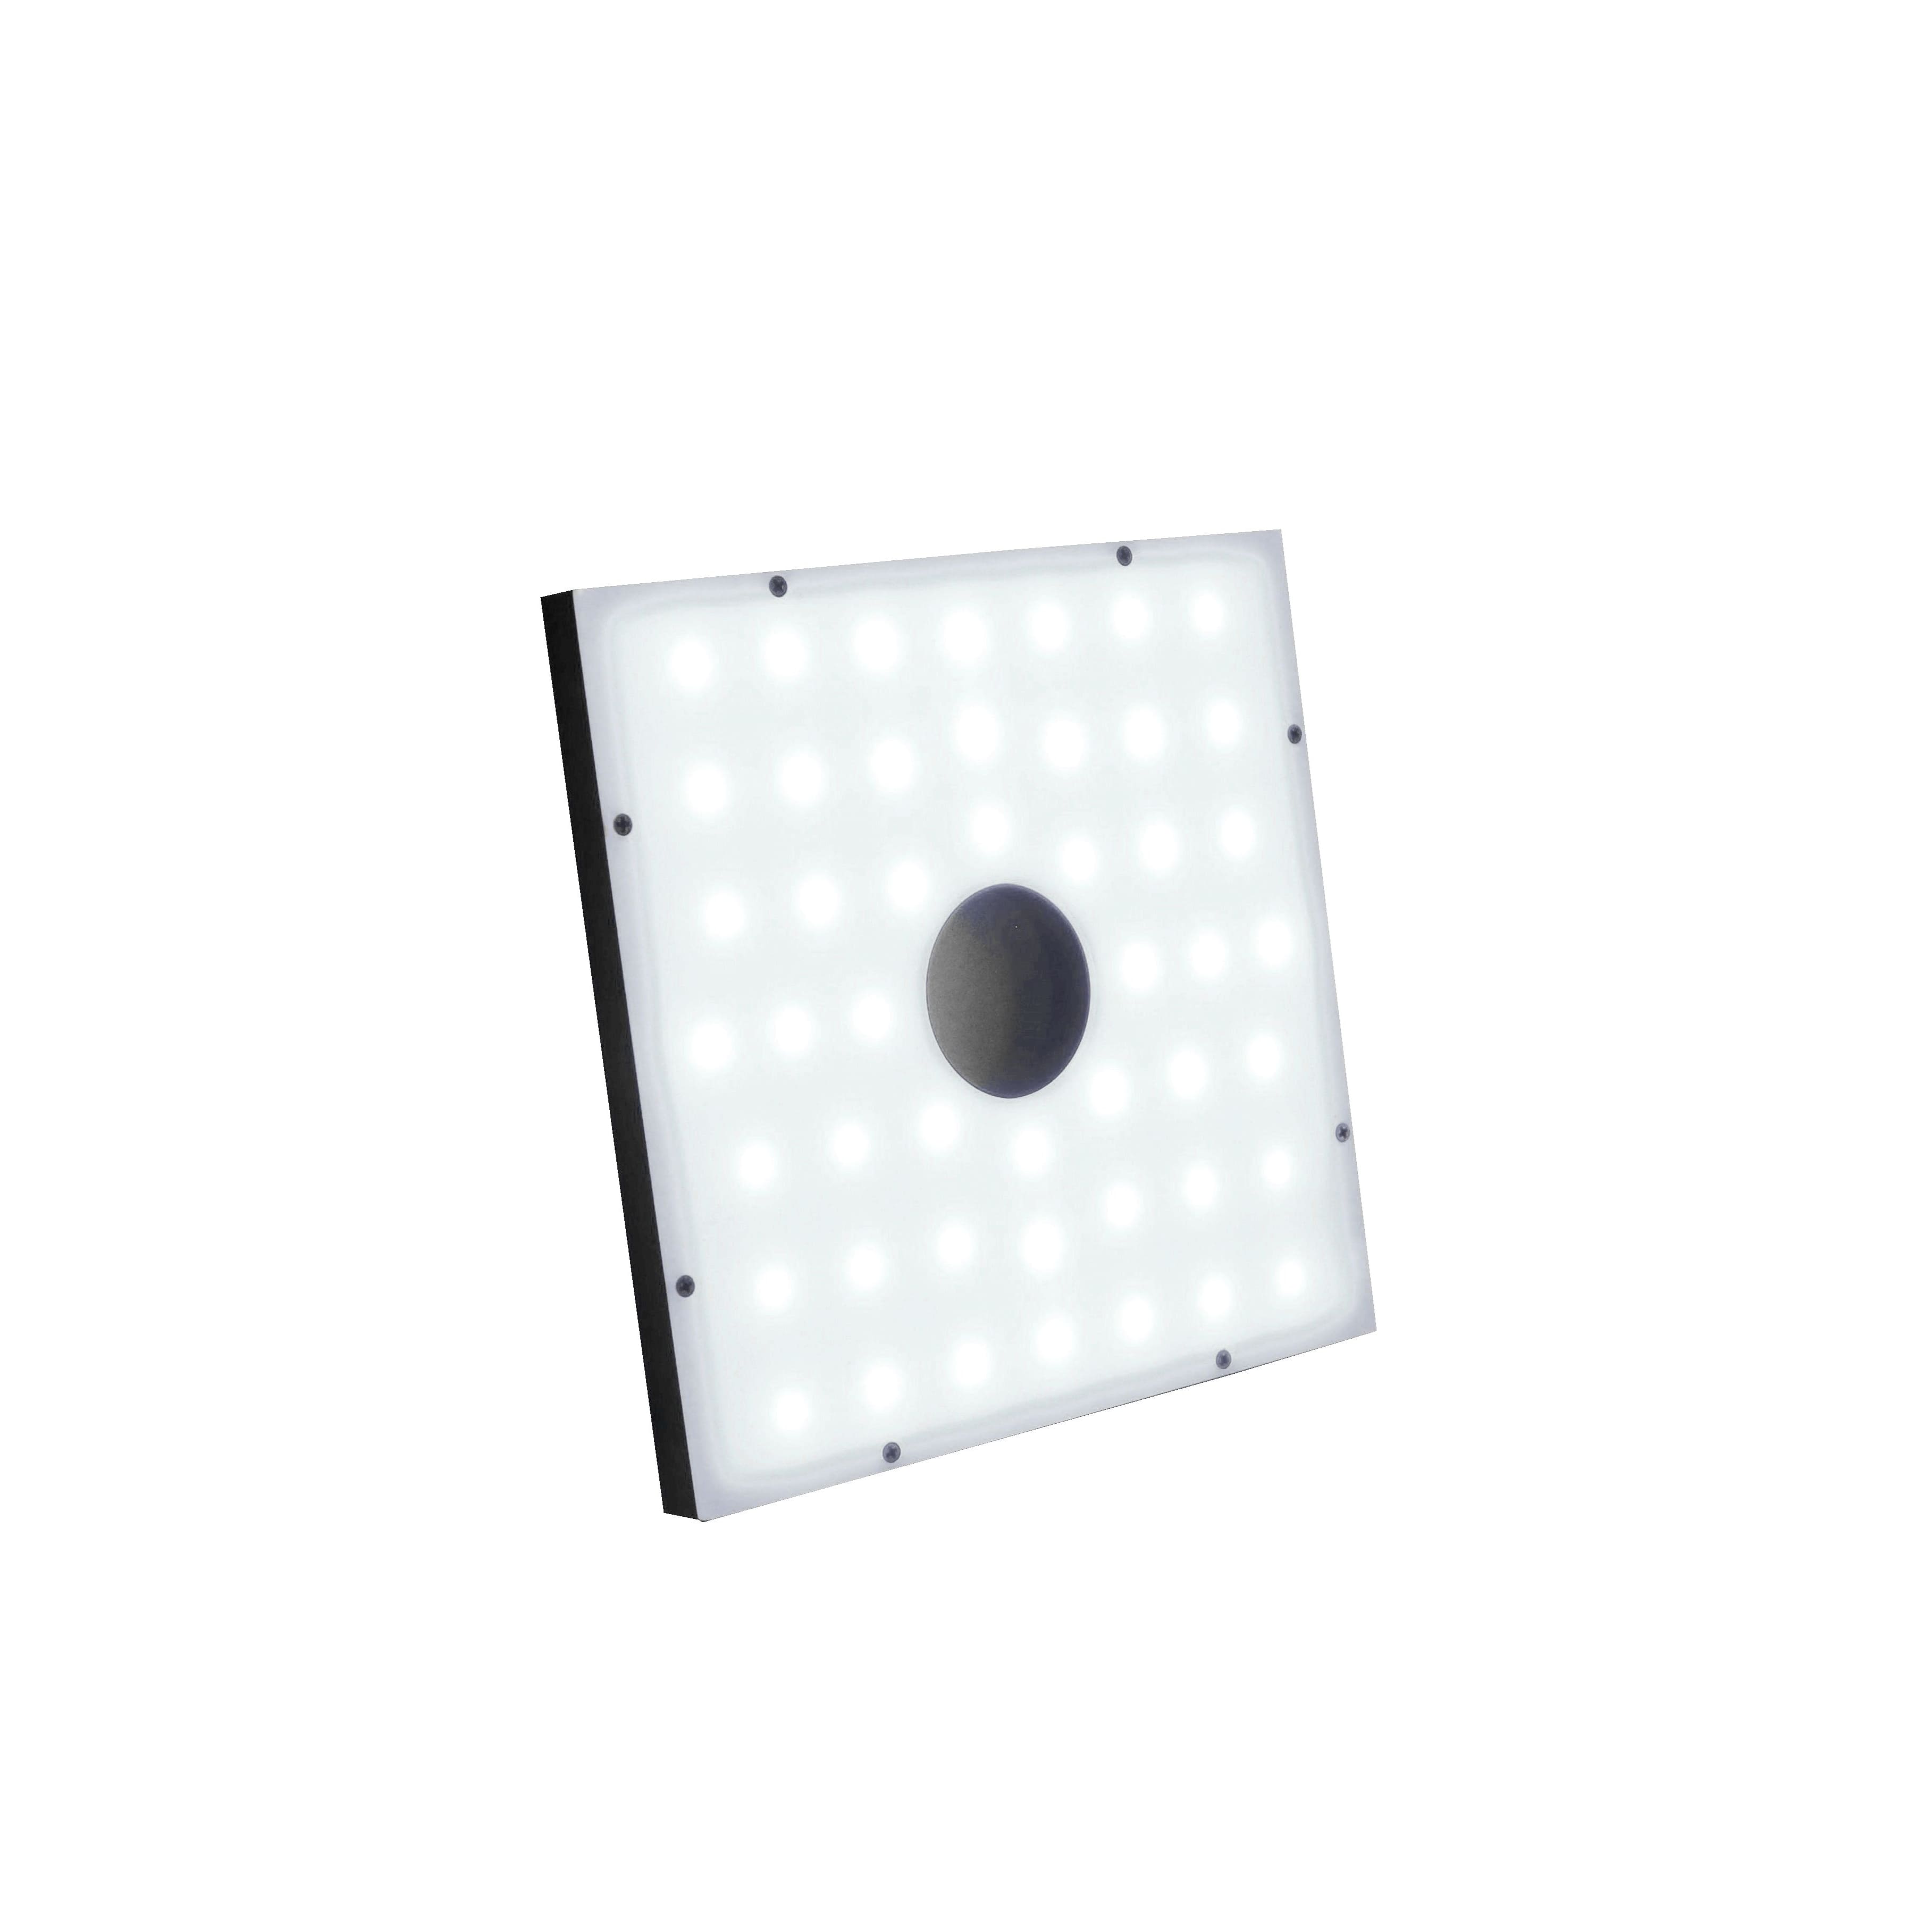 DSQ2-208/208 Diffused Square Panel Lights – White